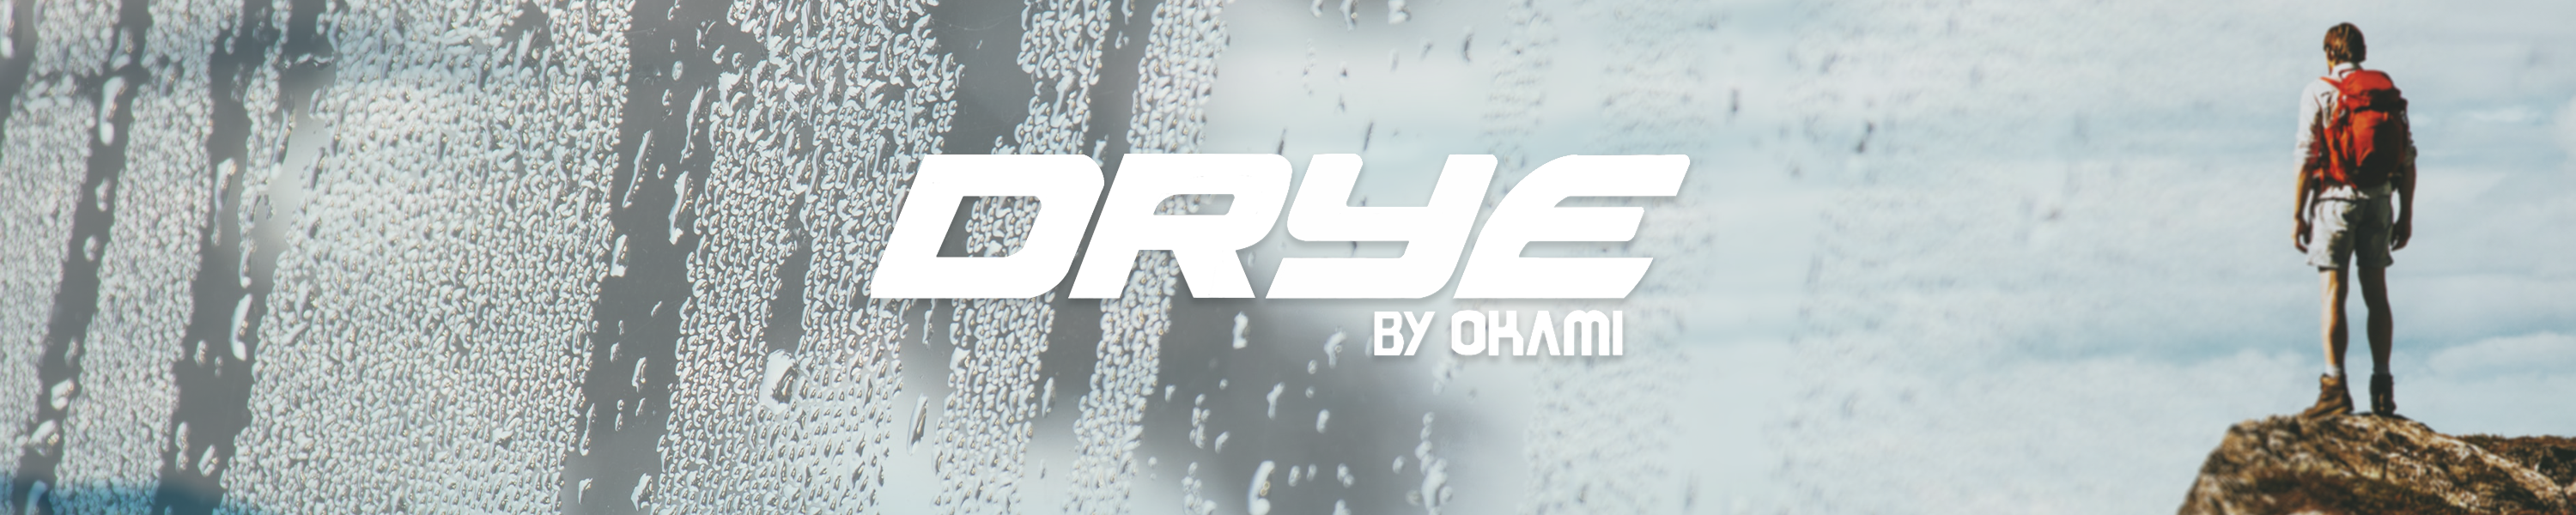 DRYE - Waterproof Luggage and Moto Gear